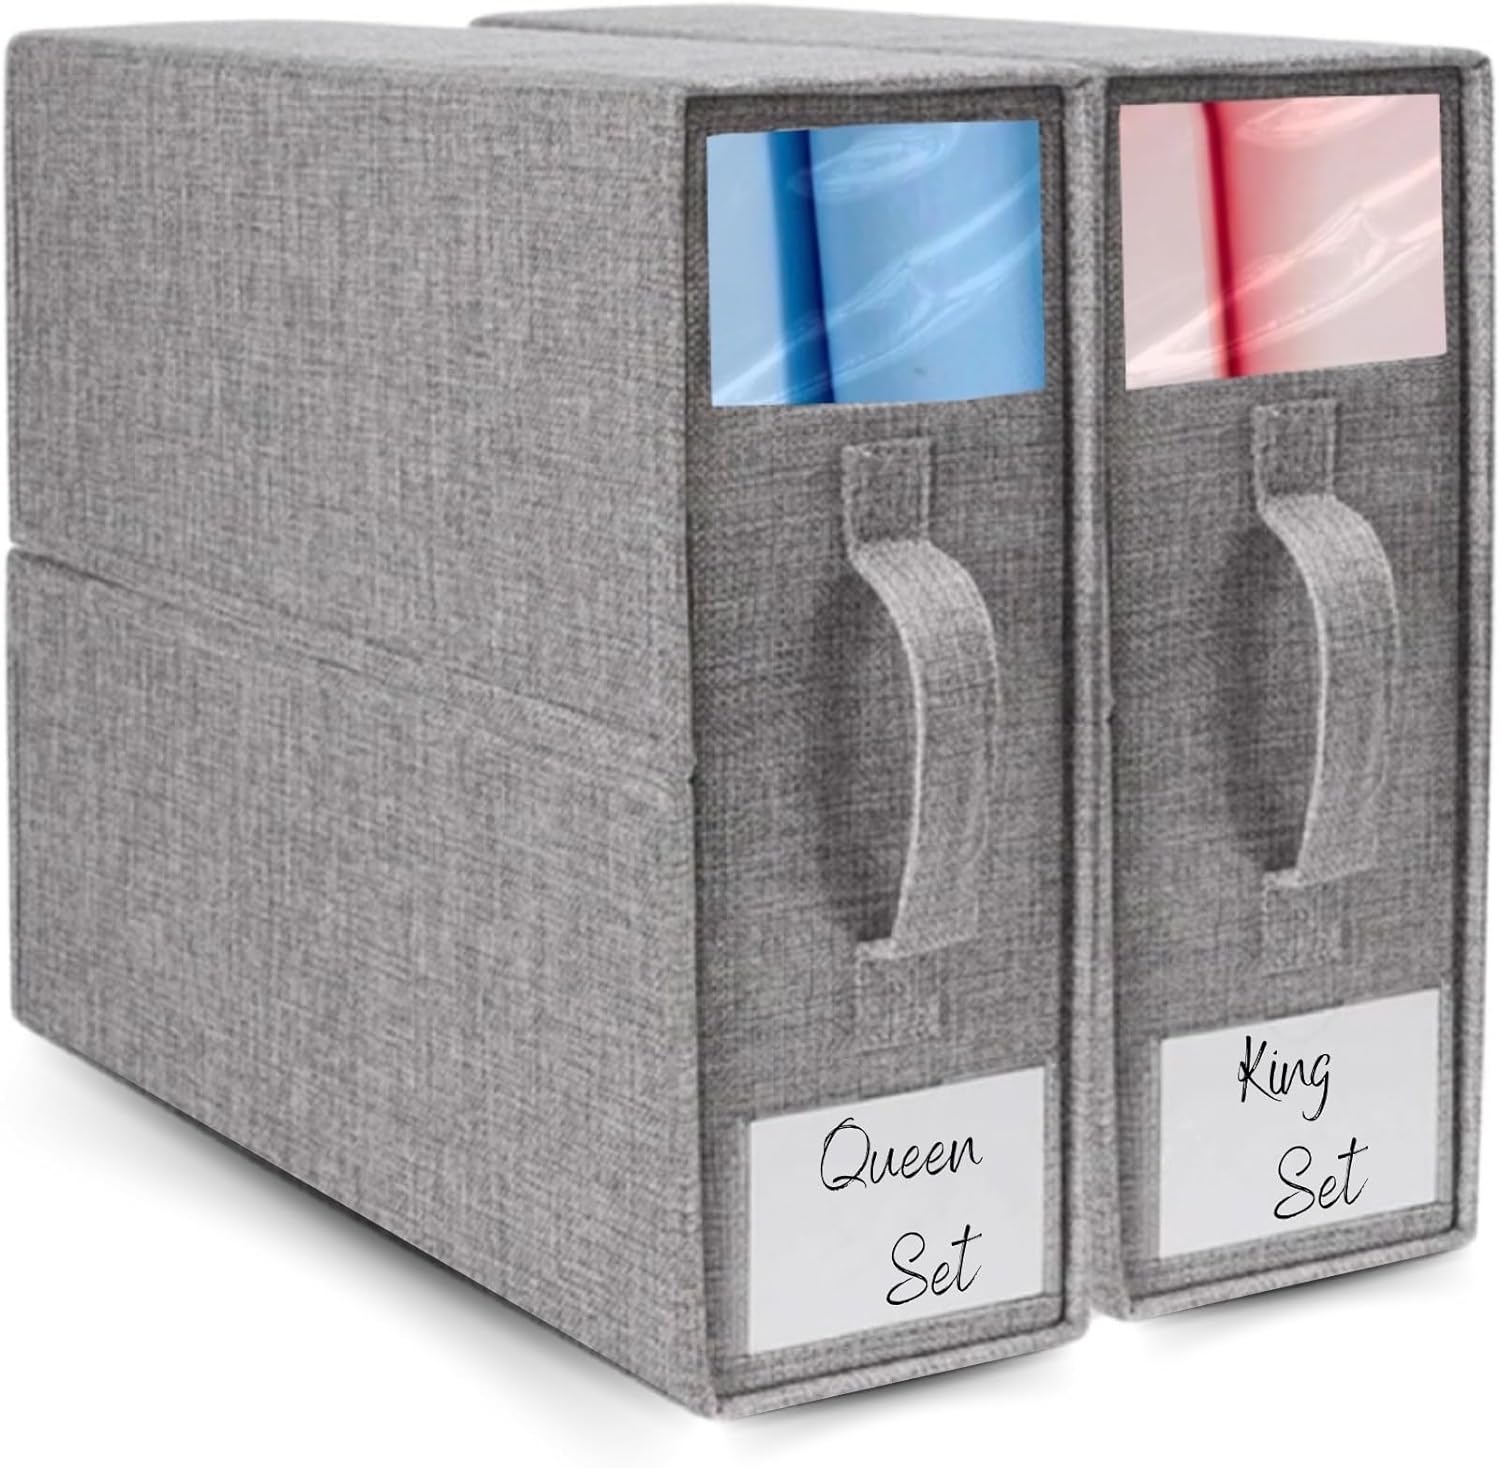 Linen Sheets Organizer And Storage, Closet Organizers Storage Box | One Foldable Storage Box Fits King Size Sheets Or Duvet | Space Saver, Premium Gray Linen, 13x15x5 Per Organizer